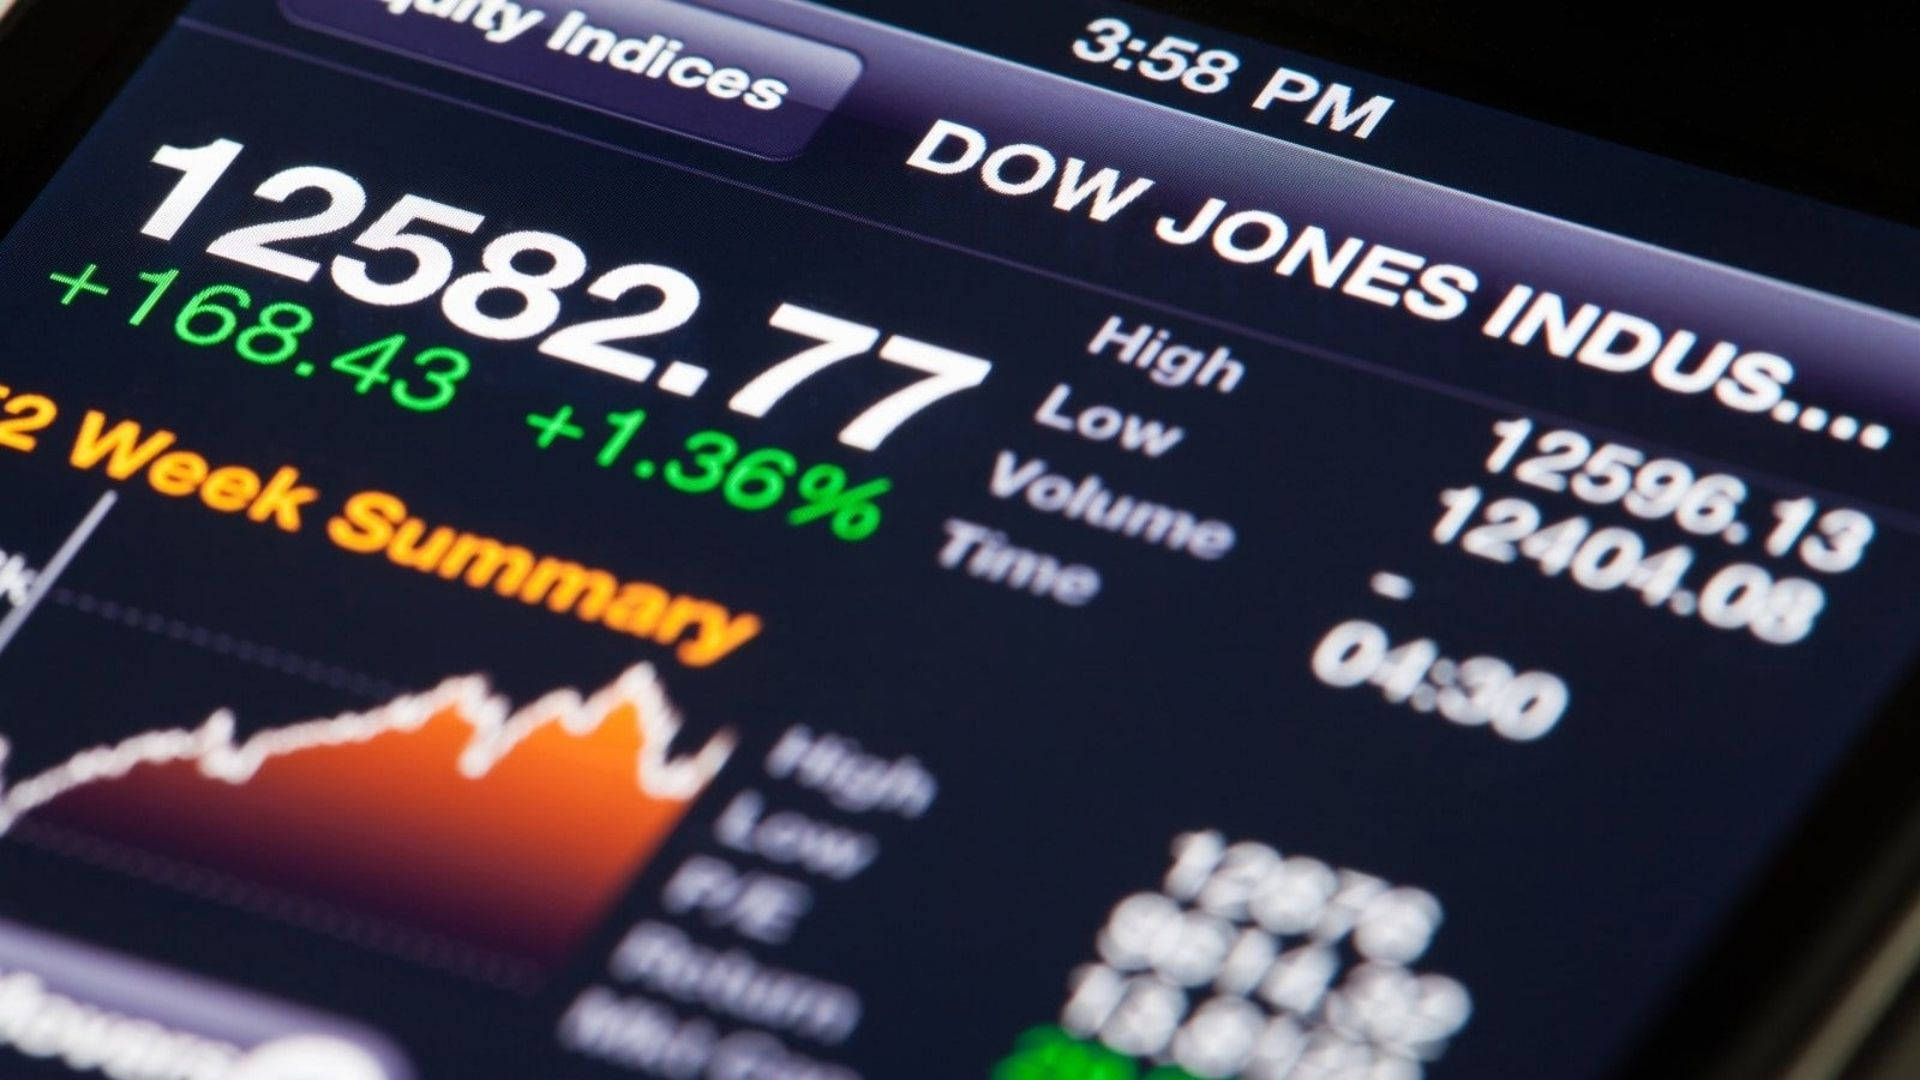 Dow Jones Week Summary Background